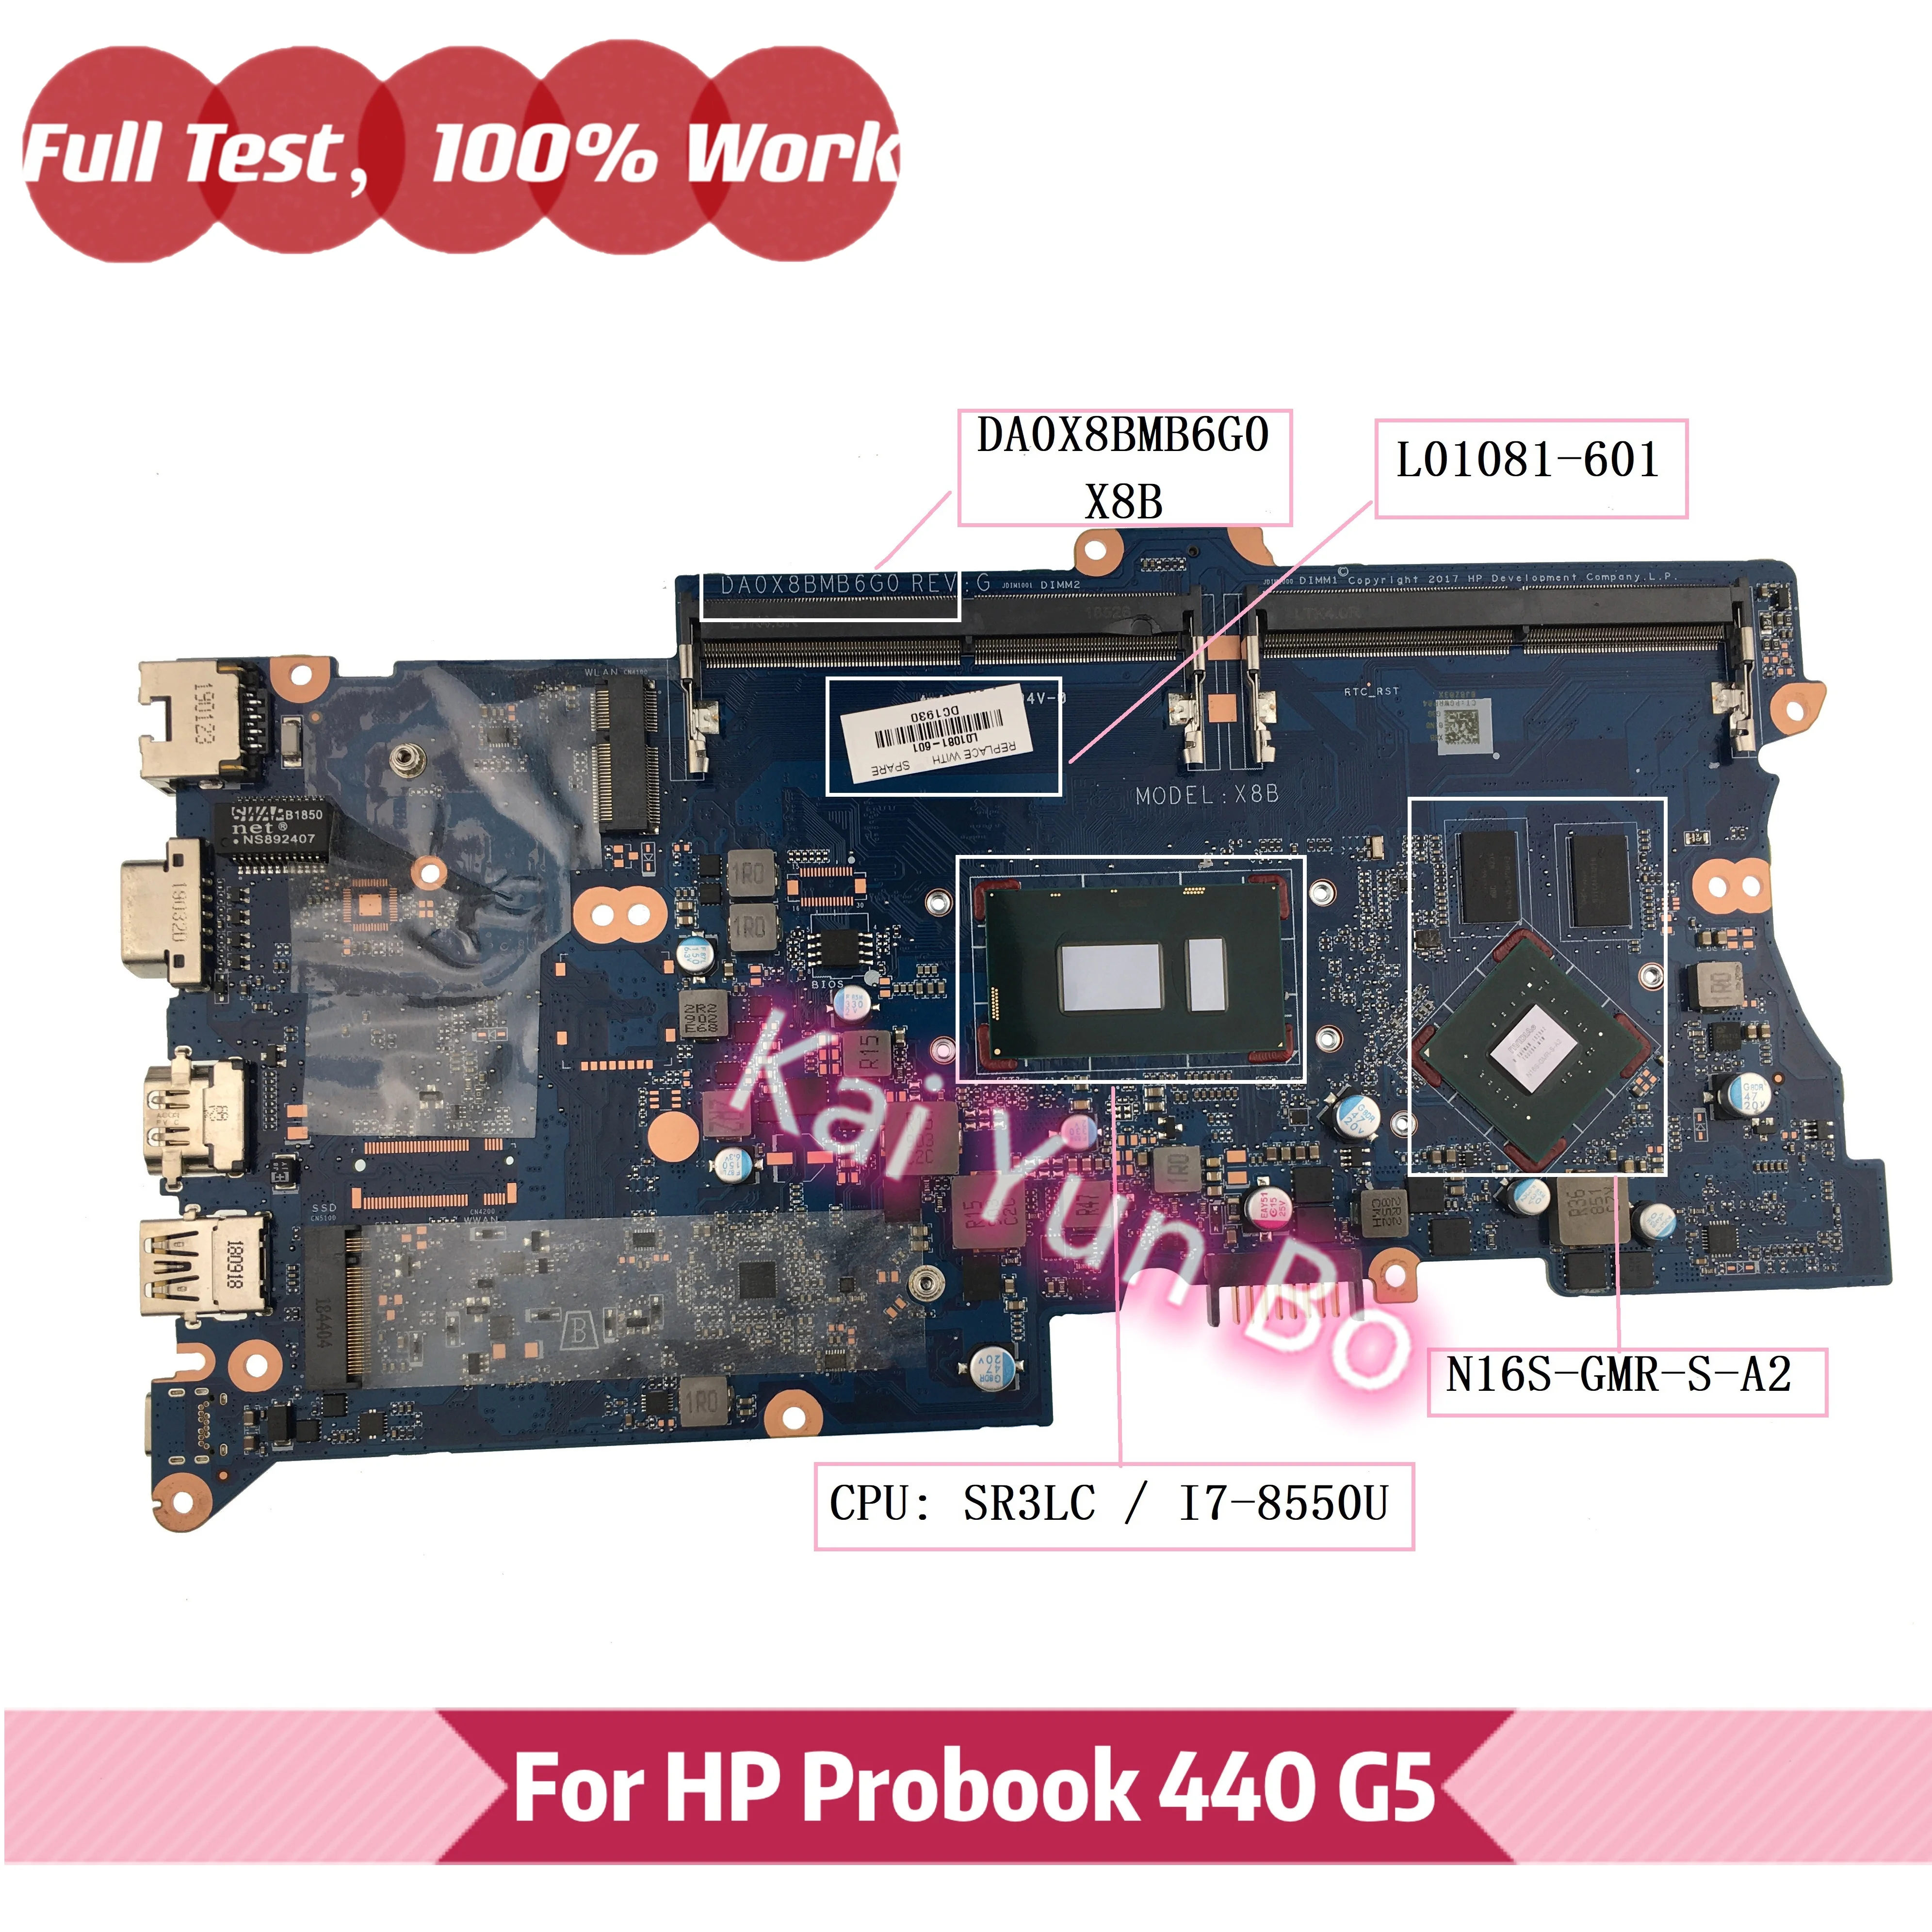 

DA0X8BMB6G0 X8B For HP ProBook 430 G5 440 G5 Laptop Motherboard L01081-601 L01081-001 with i7-8550U CPU N16S-GMR-S-A2 2GB DDR4